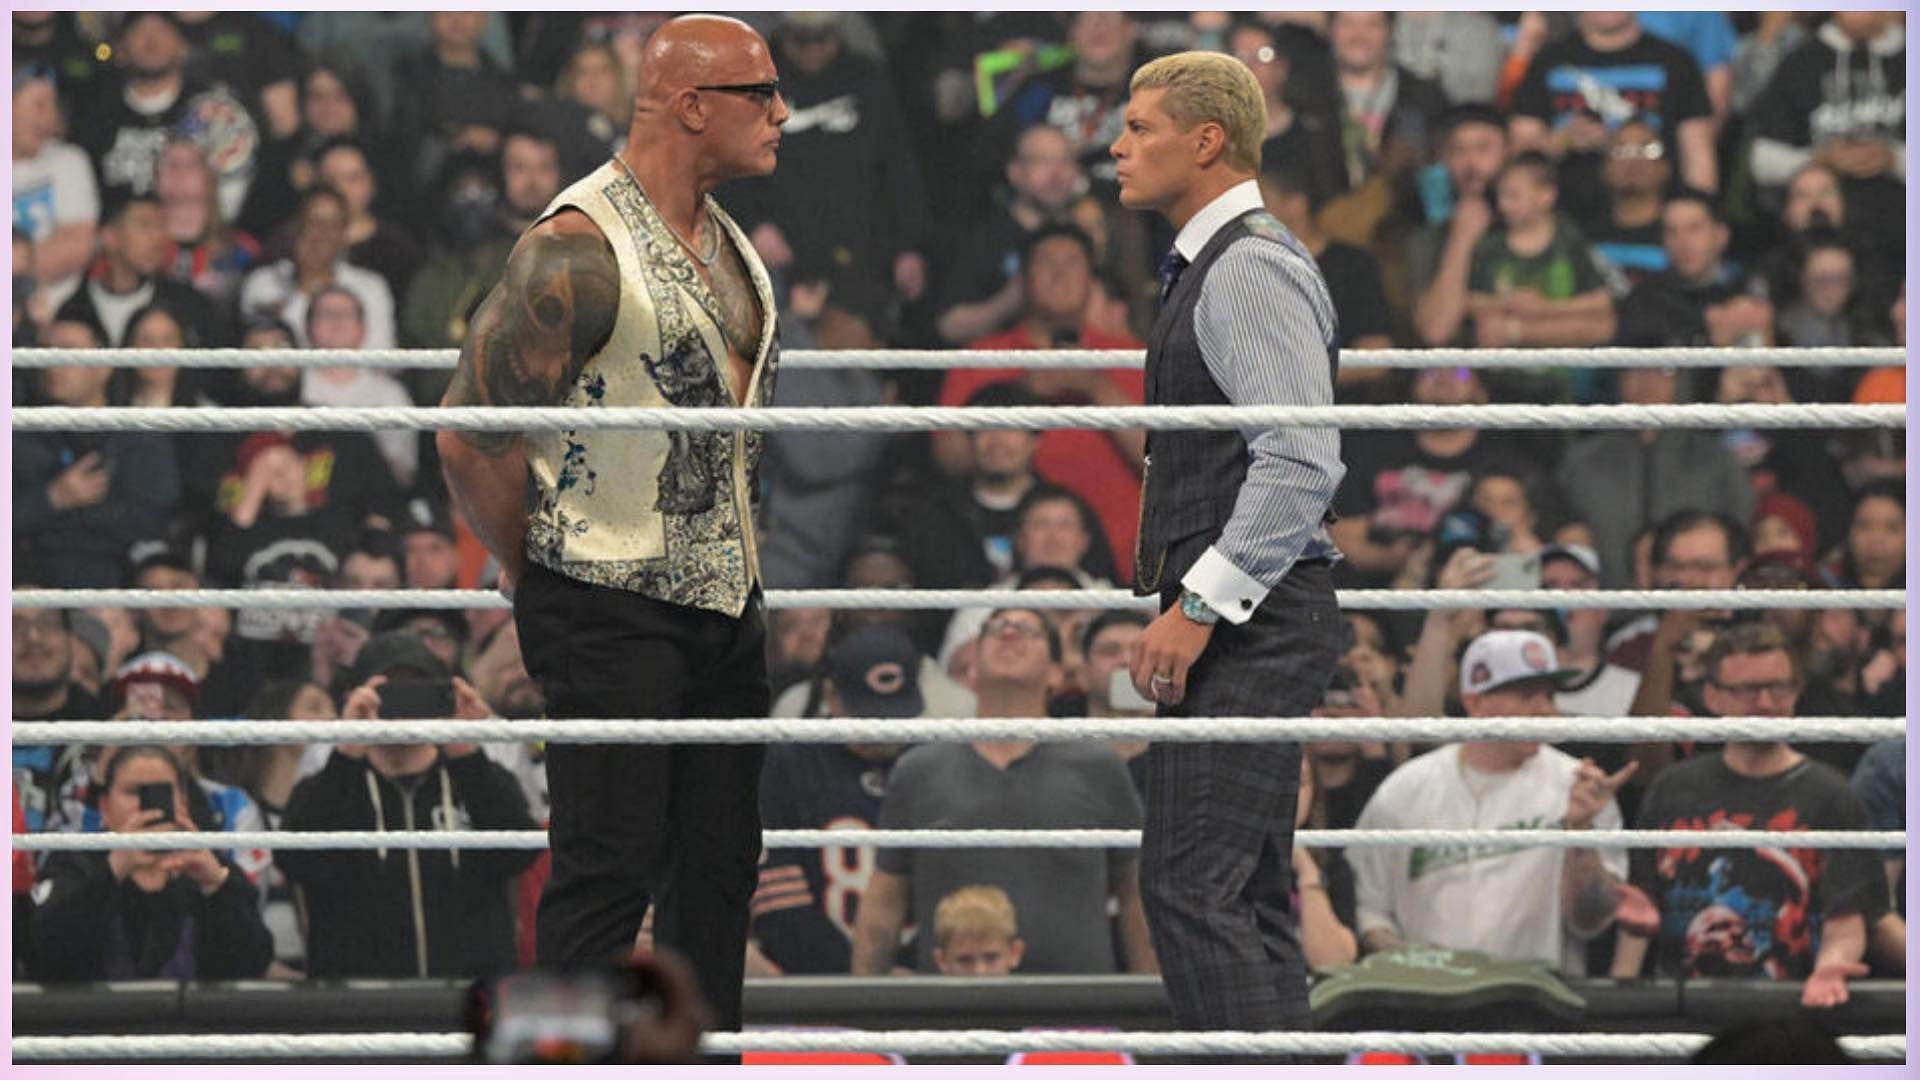 Cody Rhodes will challenge Roman Reigns on this WrestleMania